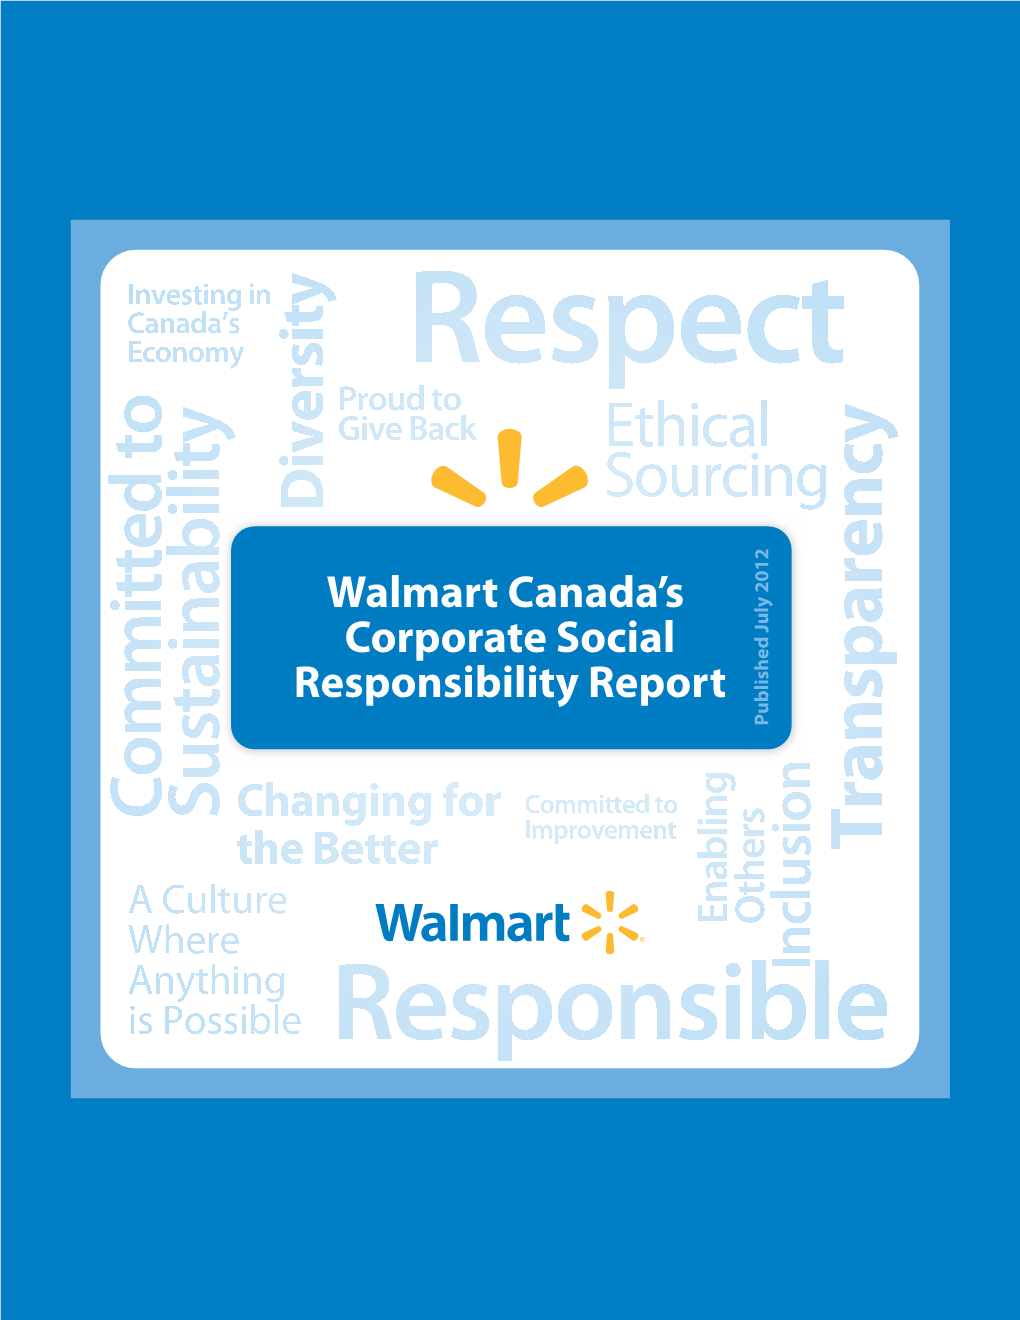 Walmart Canada's Corporate Social Responsibility Report